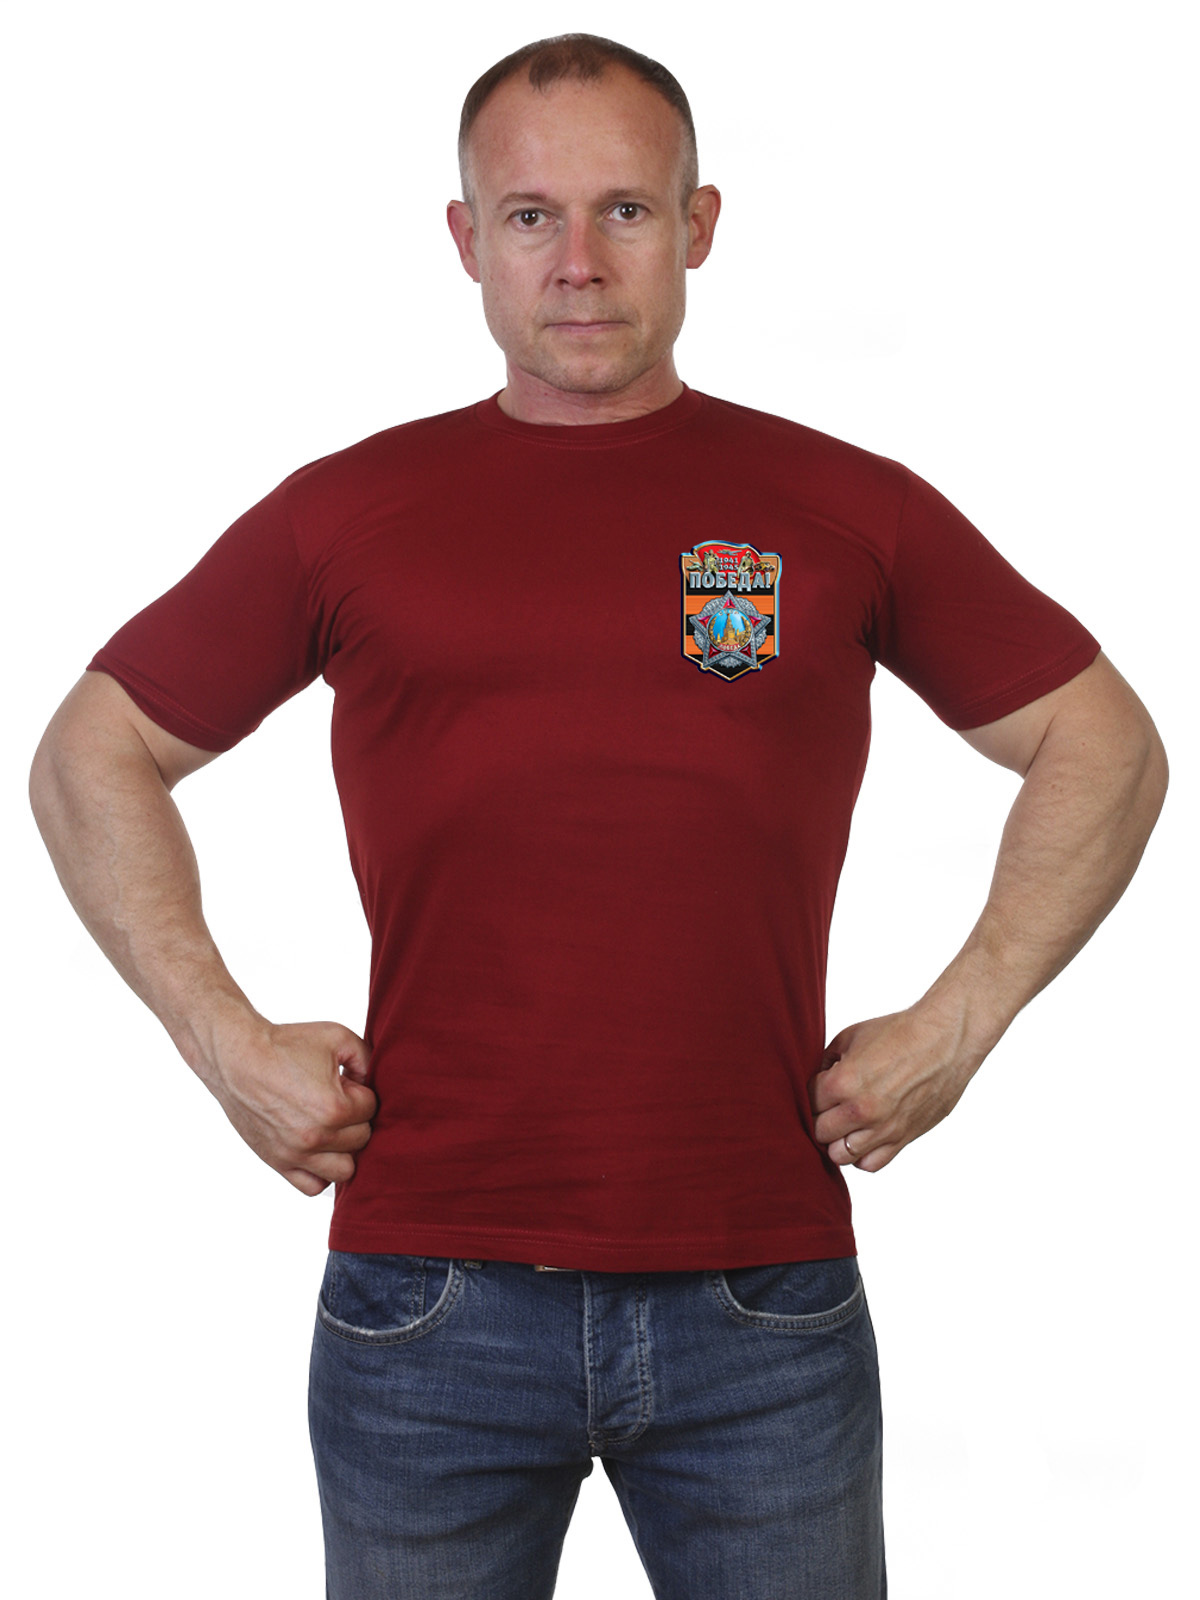 Качественная мужская футболка «Победа» 